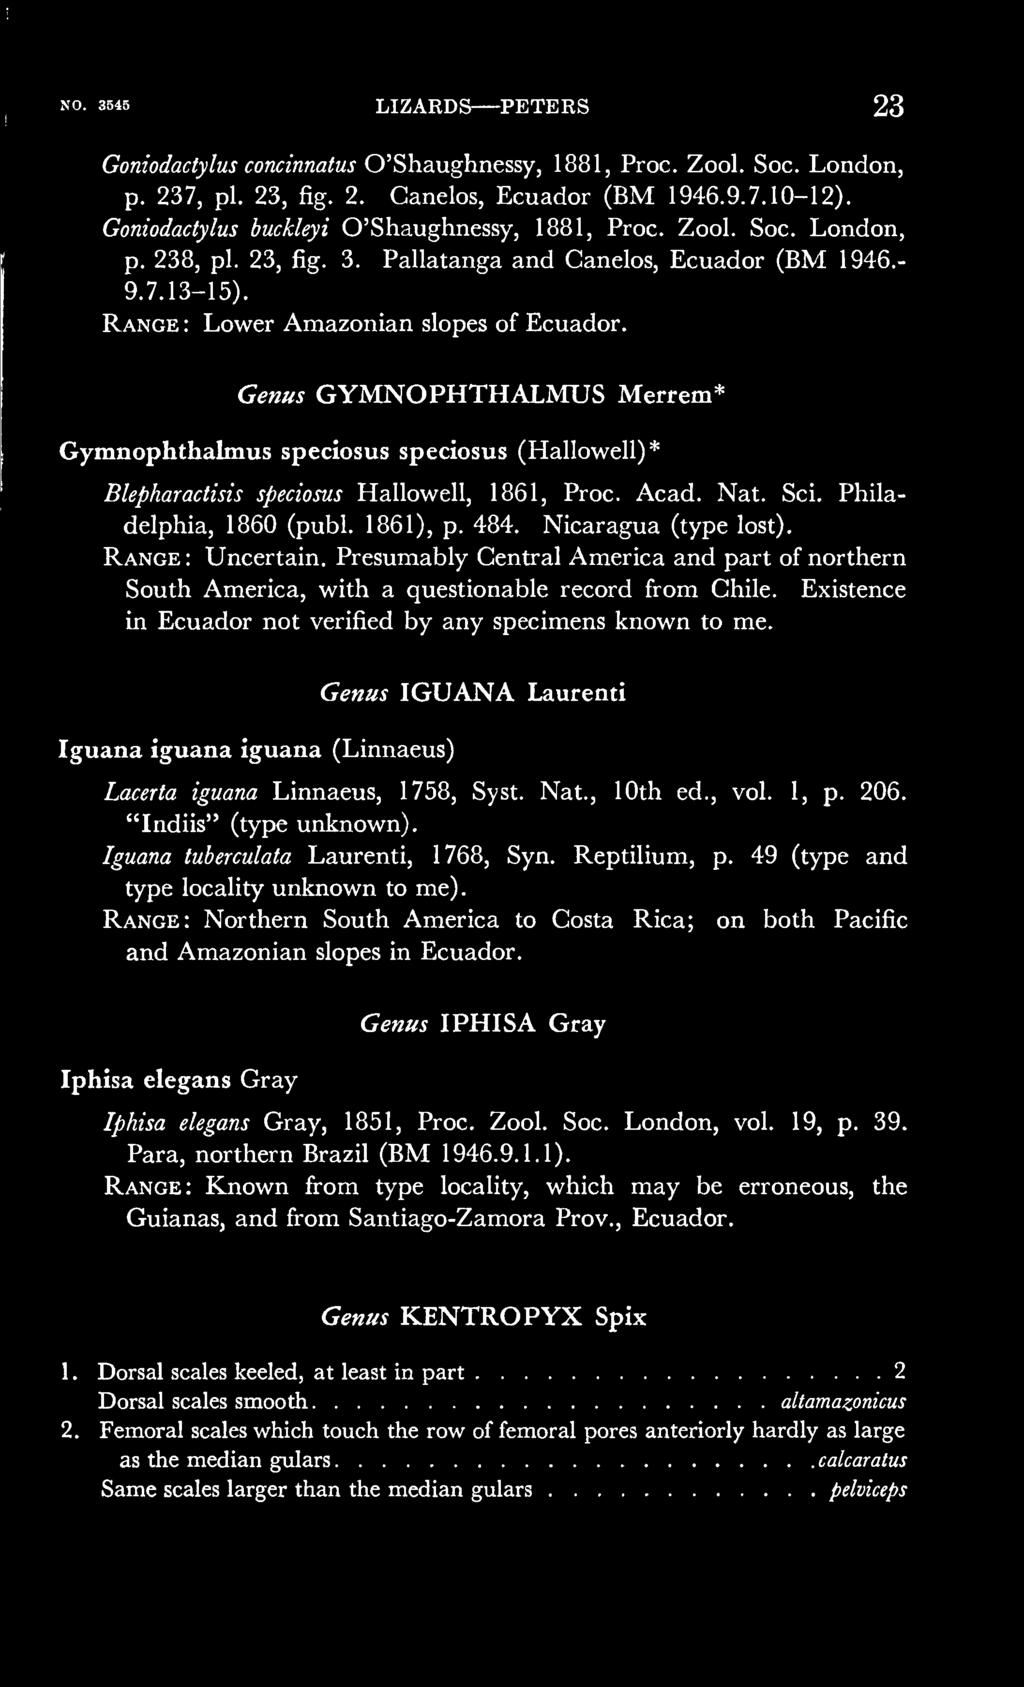 Genus GYMNOPHTHALMUS Merrem* Gymnophthalmus speciosus speciosus (Hallowell)* Blepharadisis speciosus Hallowell, 1861, Proc. Acad. Nat. Sci. Philadelphia, 1860 (publ. 1861), p. 484.